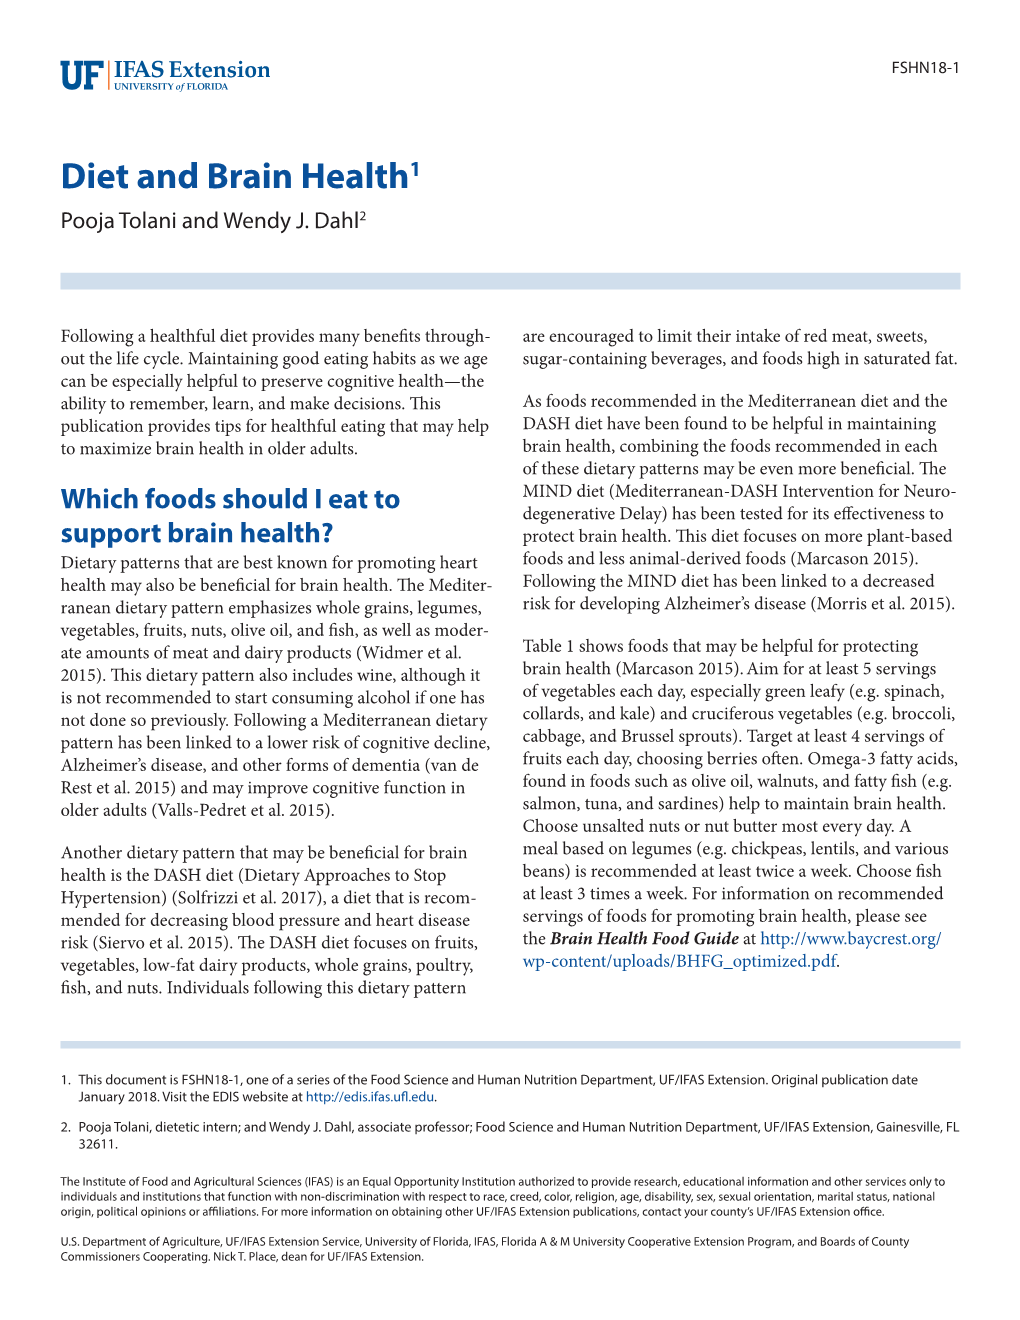 Diet and Brain Health1 Pooja Tolani and Wendy J